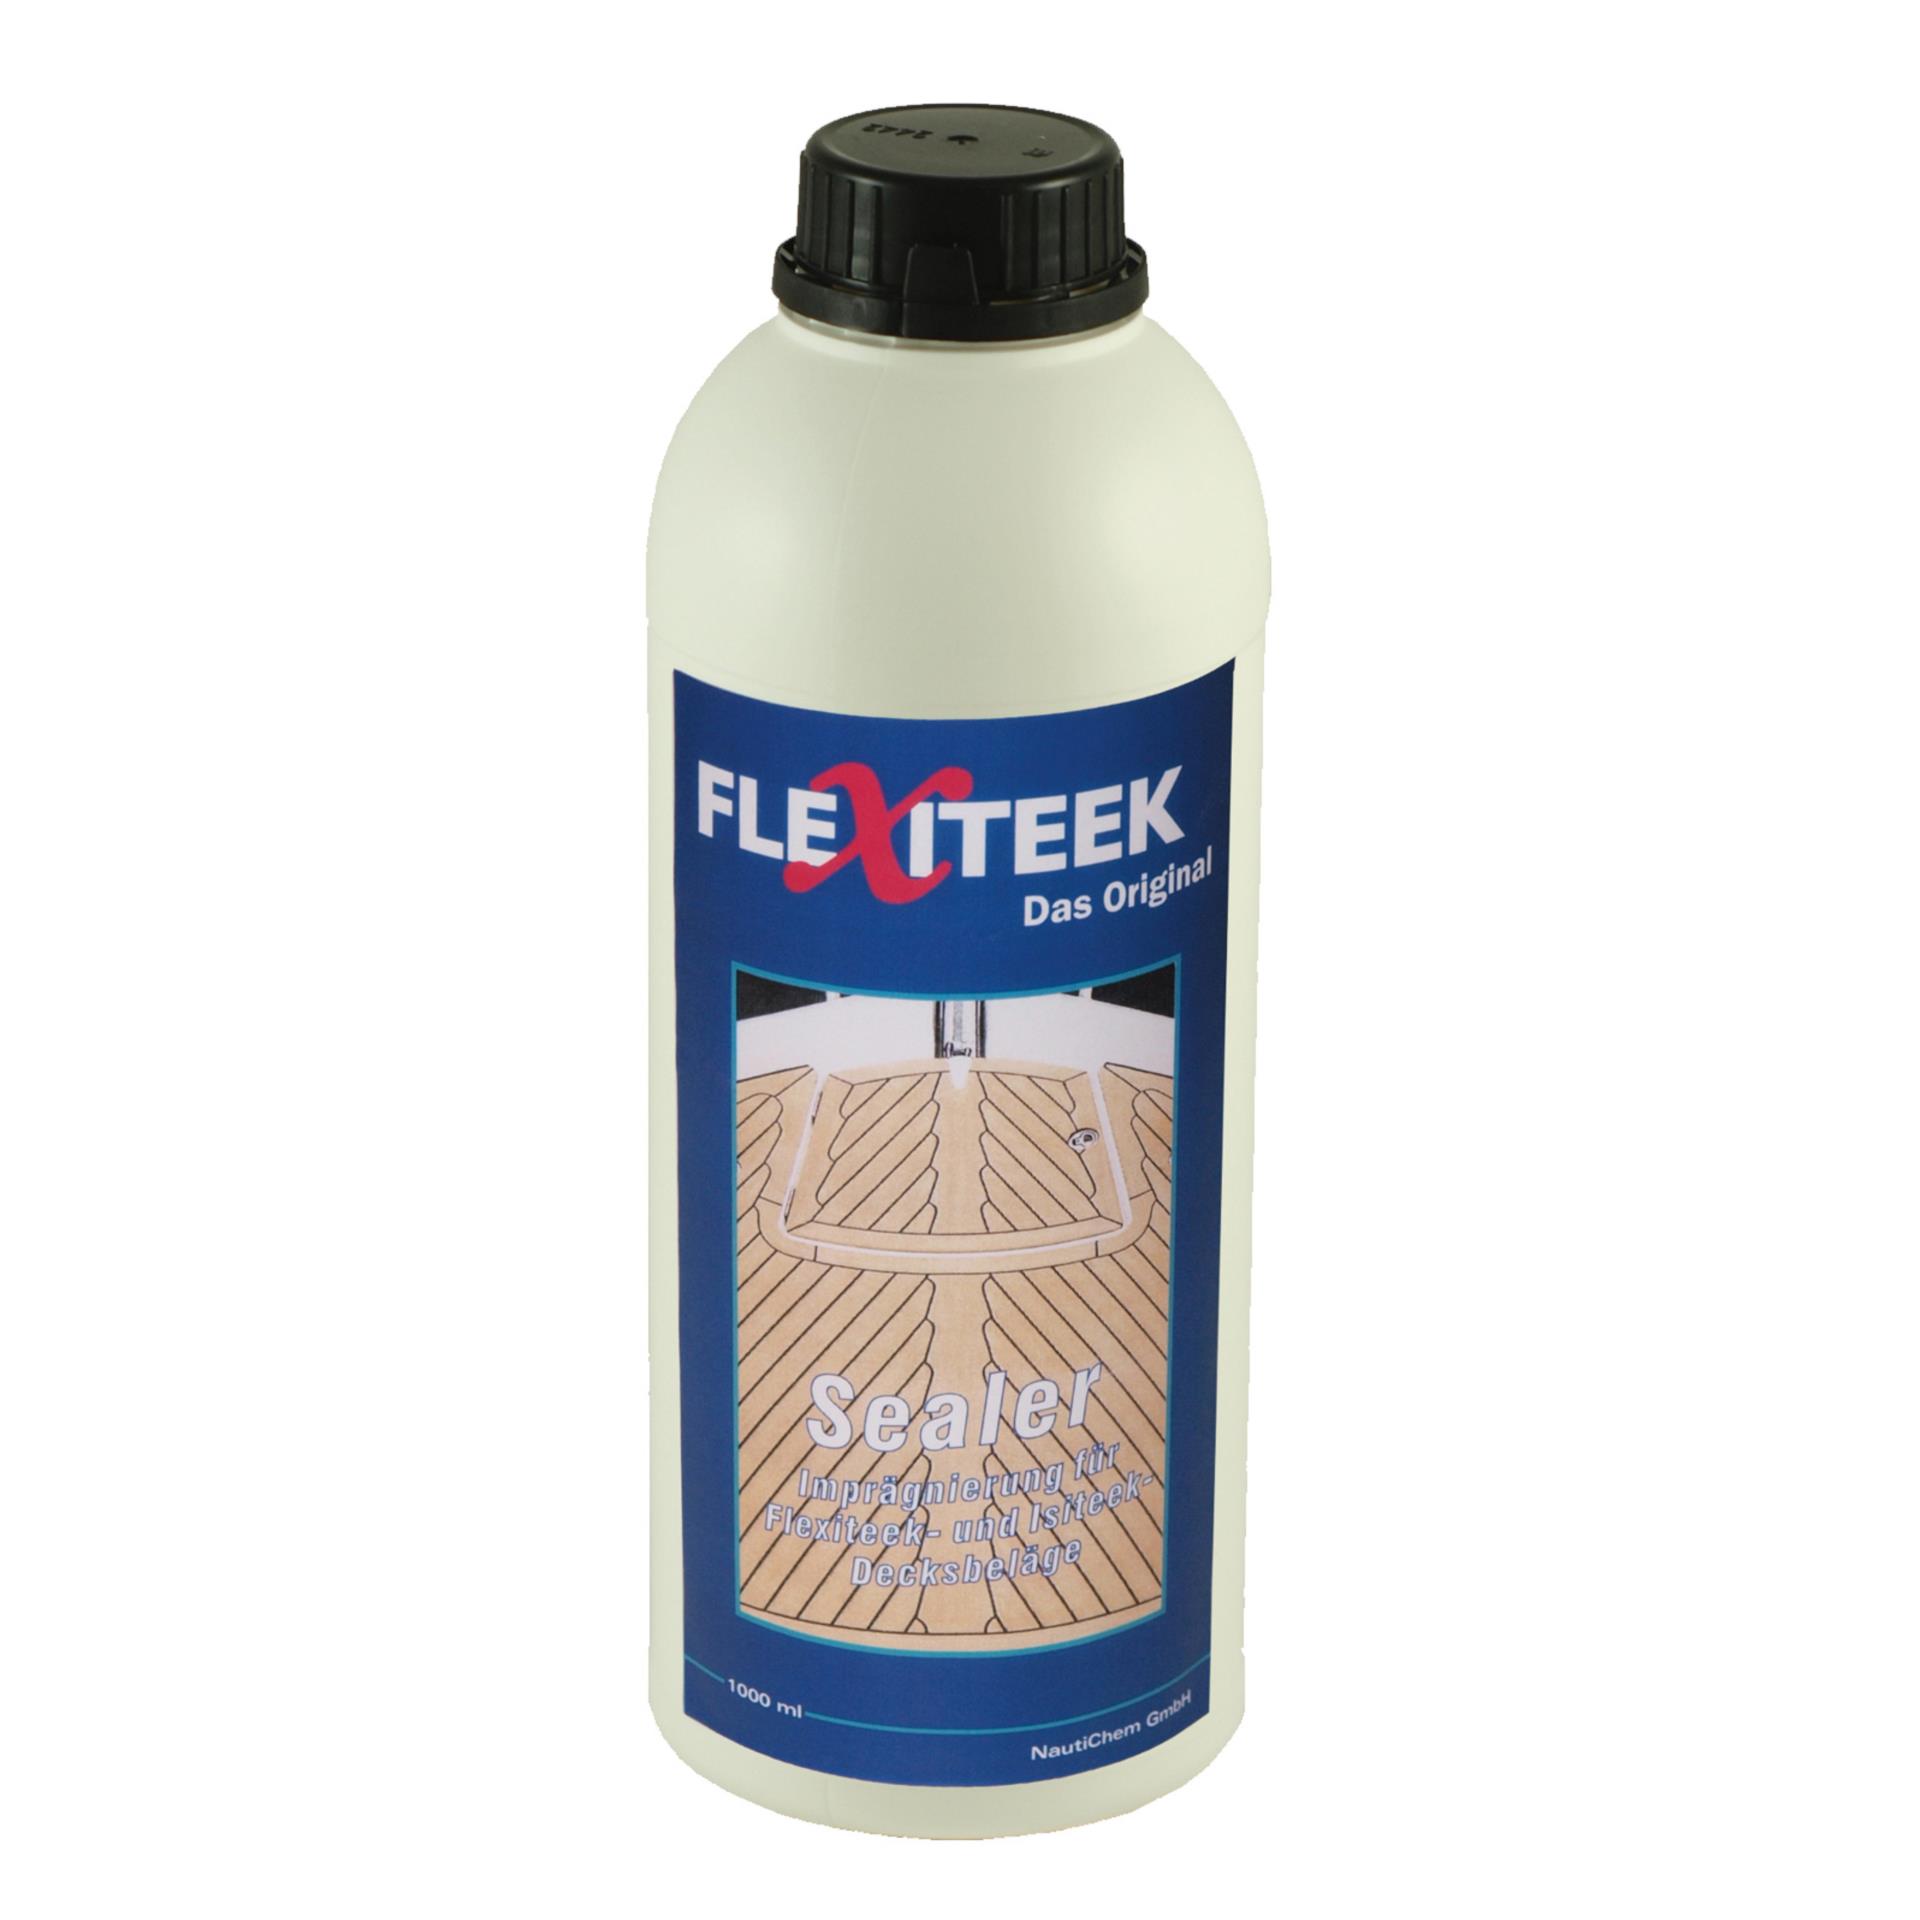 Flexiteek / Isiteek Sealer, 1000 ml